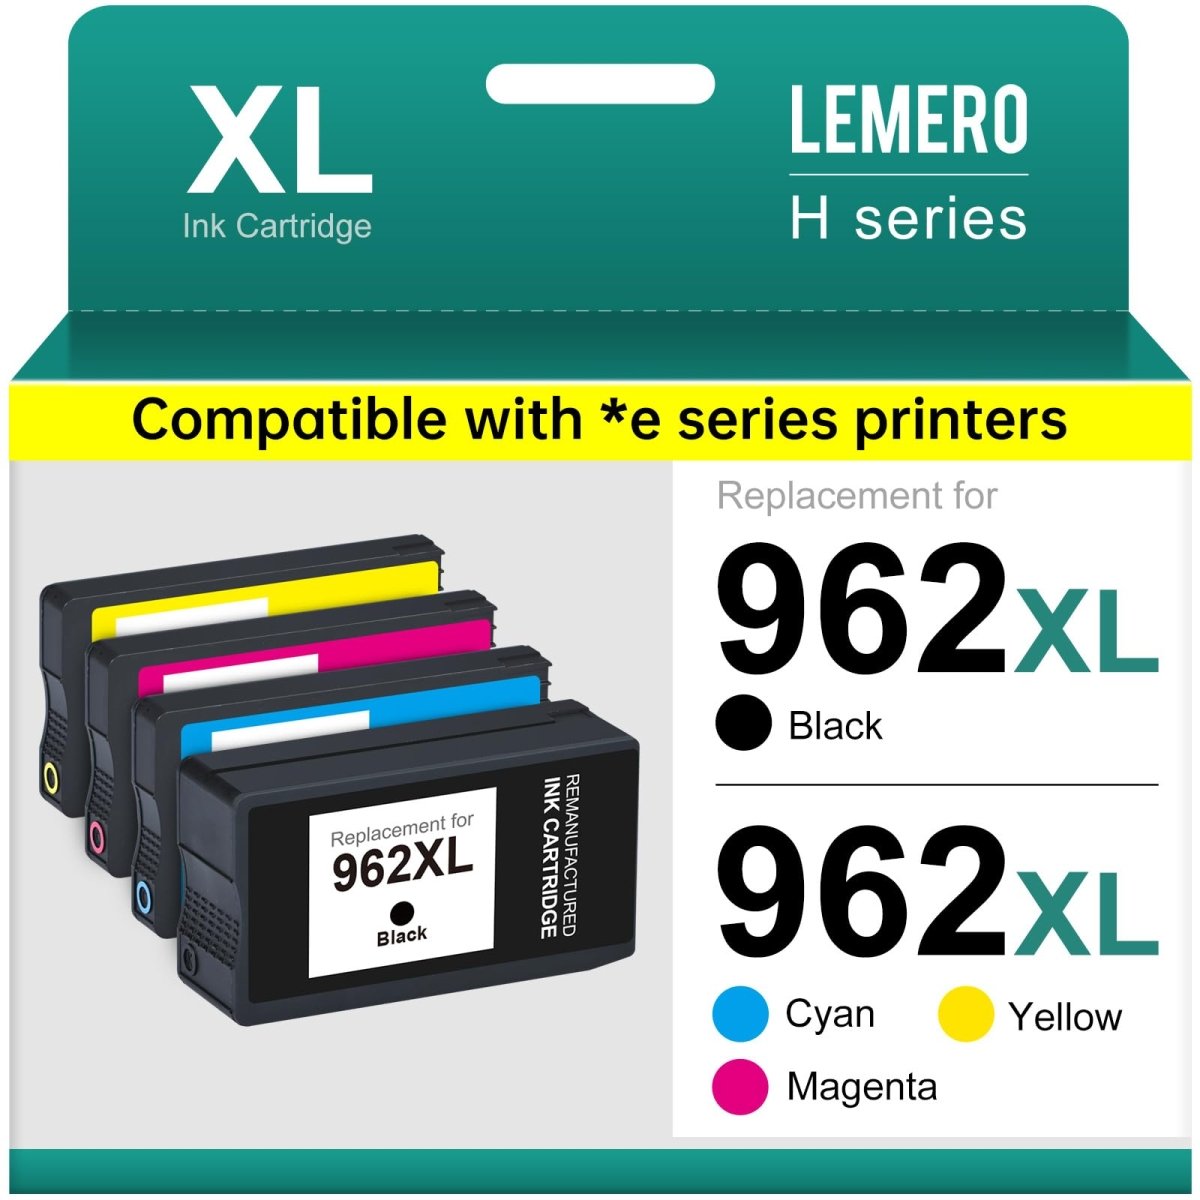 Remanufactured HP 962XL Ink Cartridges (Black, Cyan, Magenta, Yellow, 4-Pack) - Linford Office:Printer Ink & Toner Cartridge